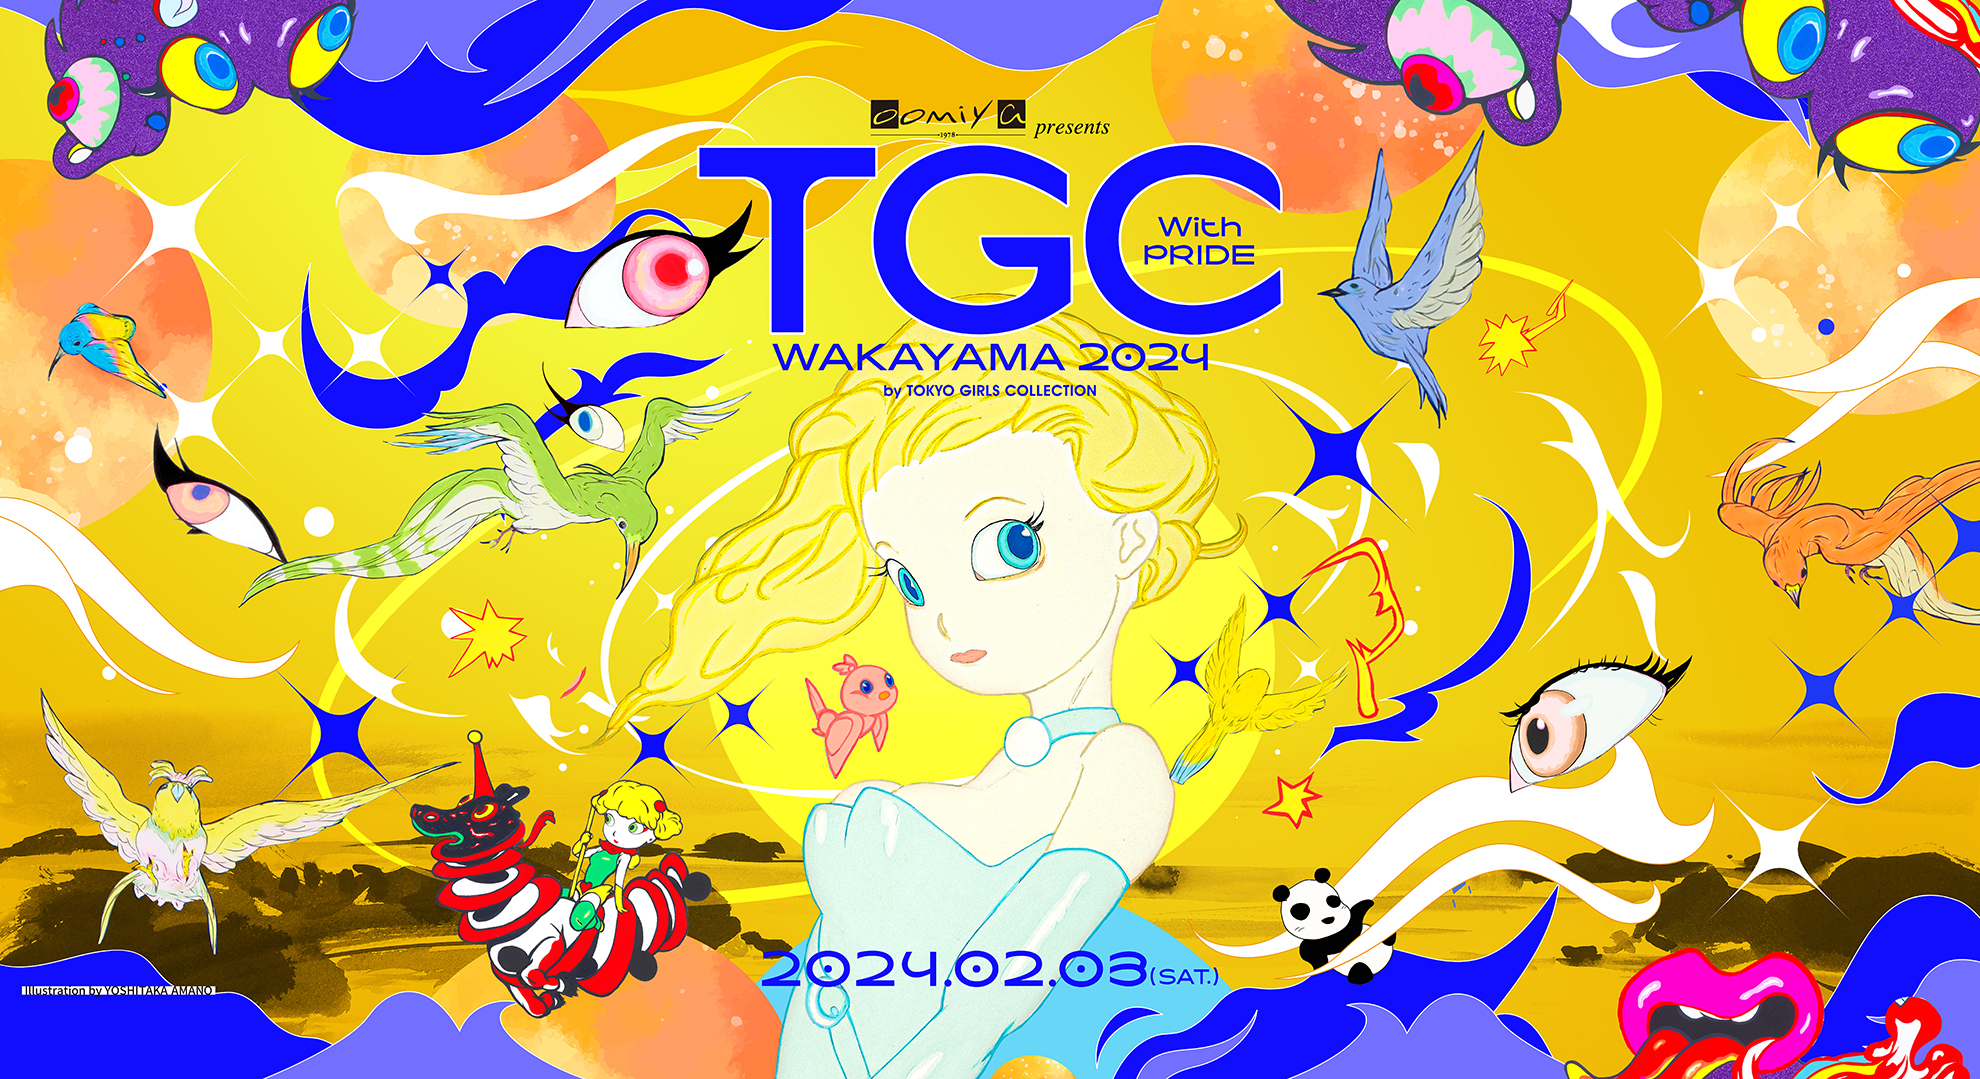 oomiya presents TGC 和歌山 2024｜TGC WAKAYAMA 2024 和歌山モデルオーディション by oomiya